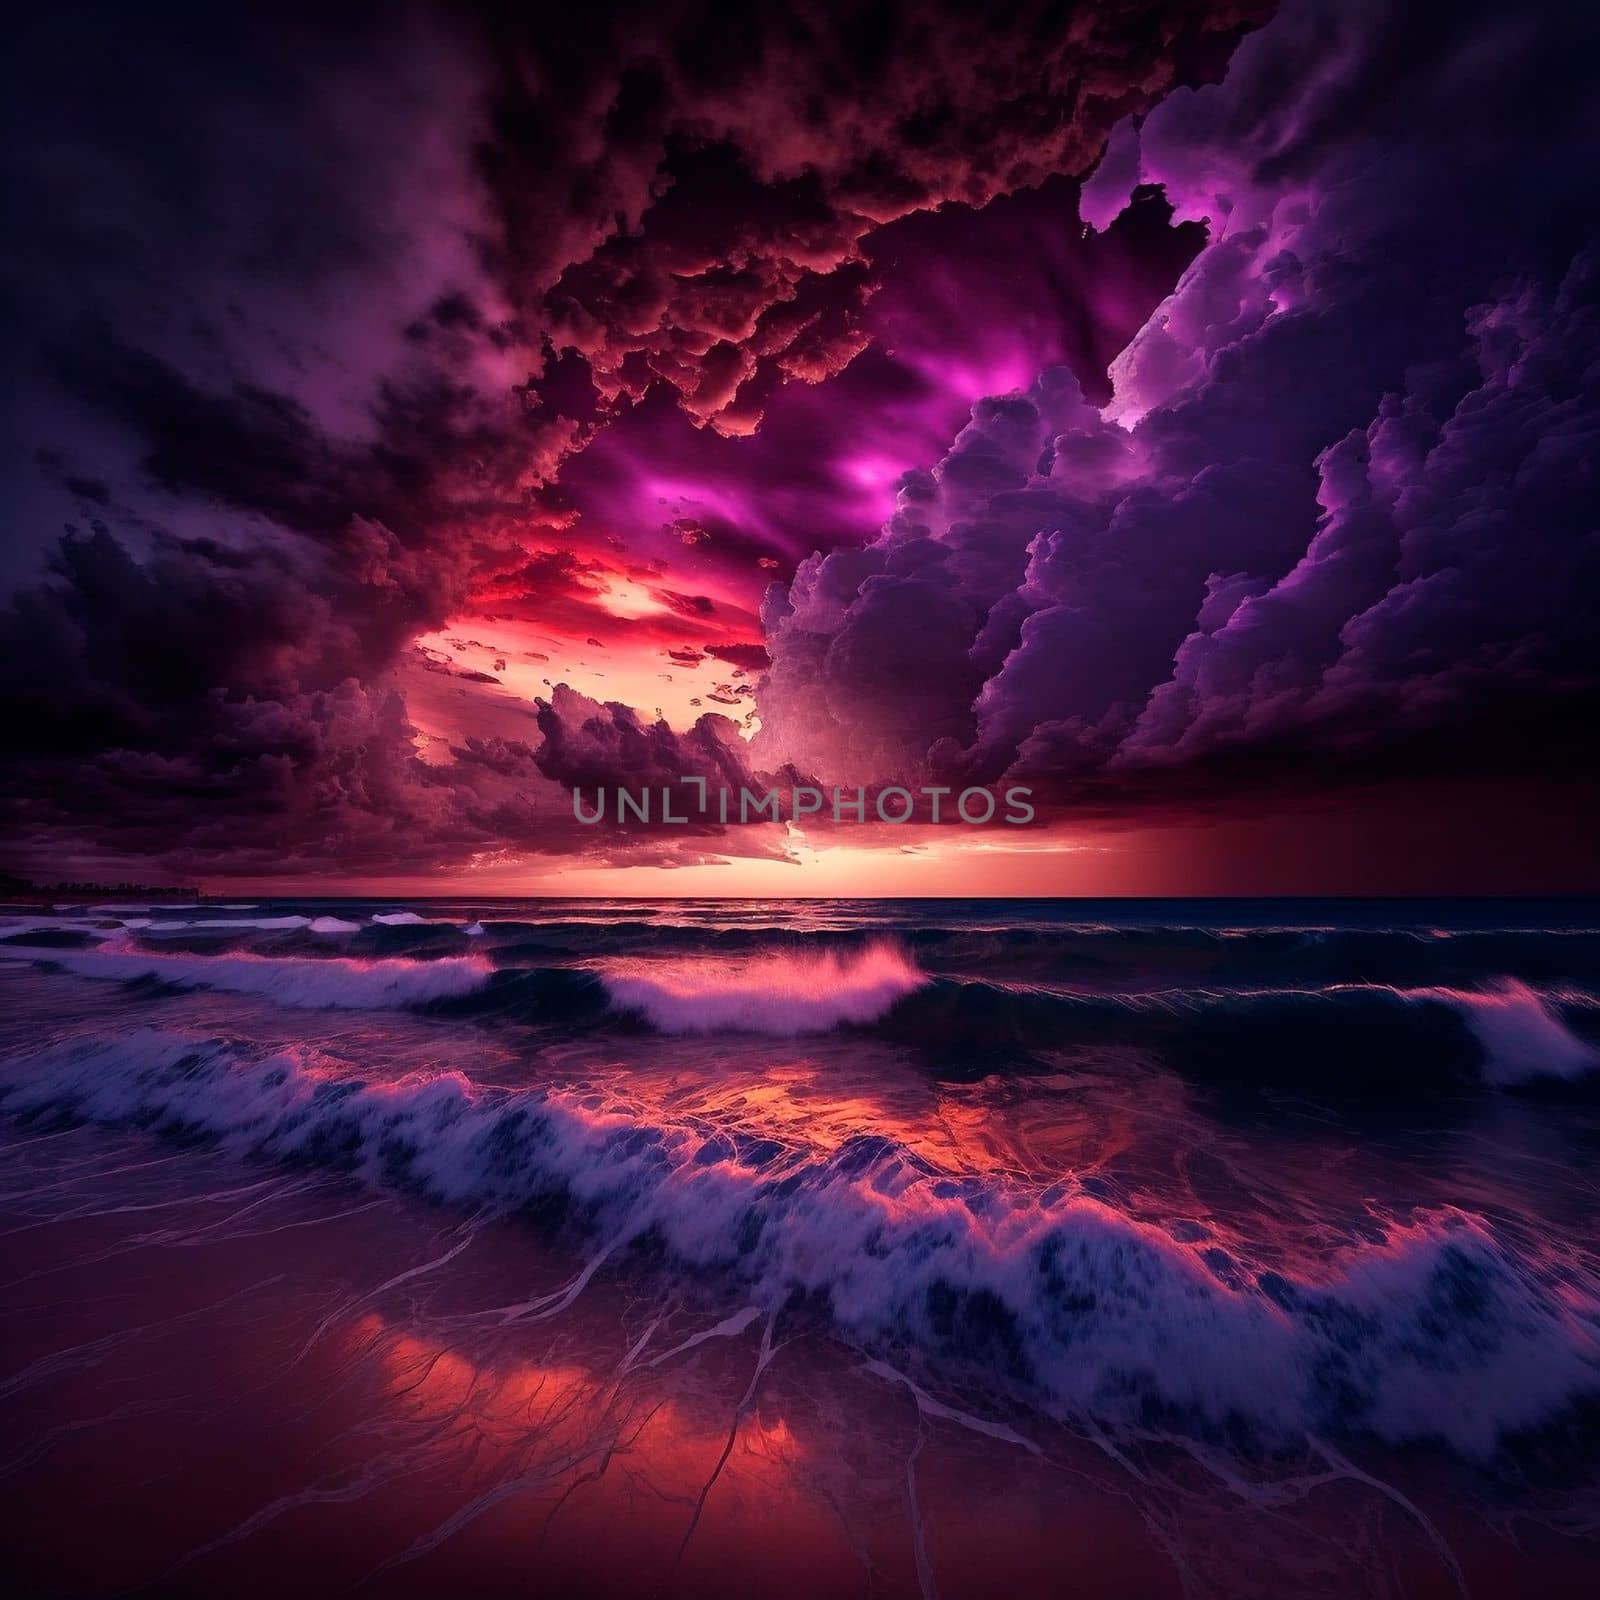 gloomy purple sunset on the beach. High quality illustration